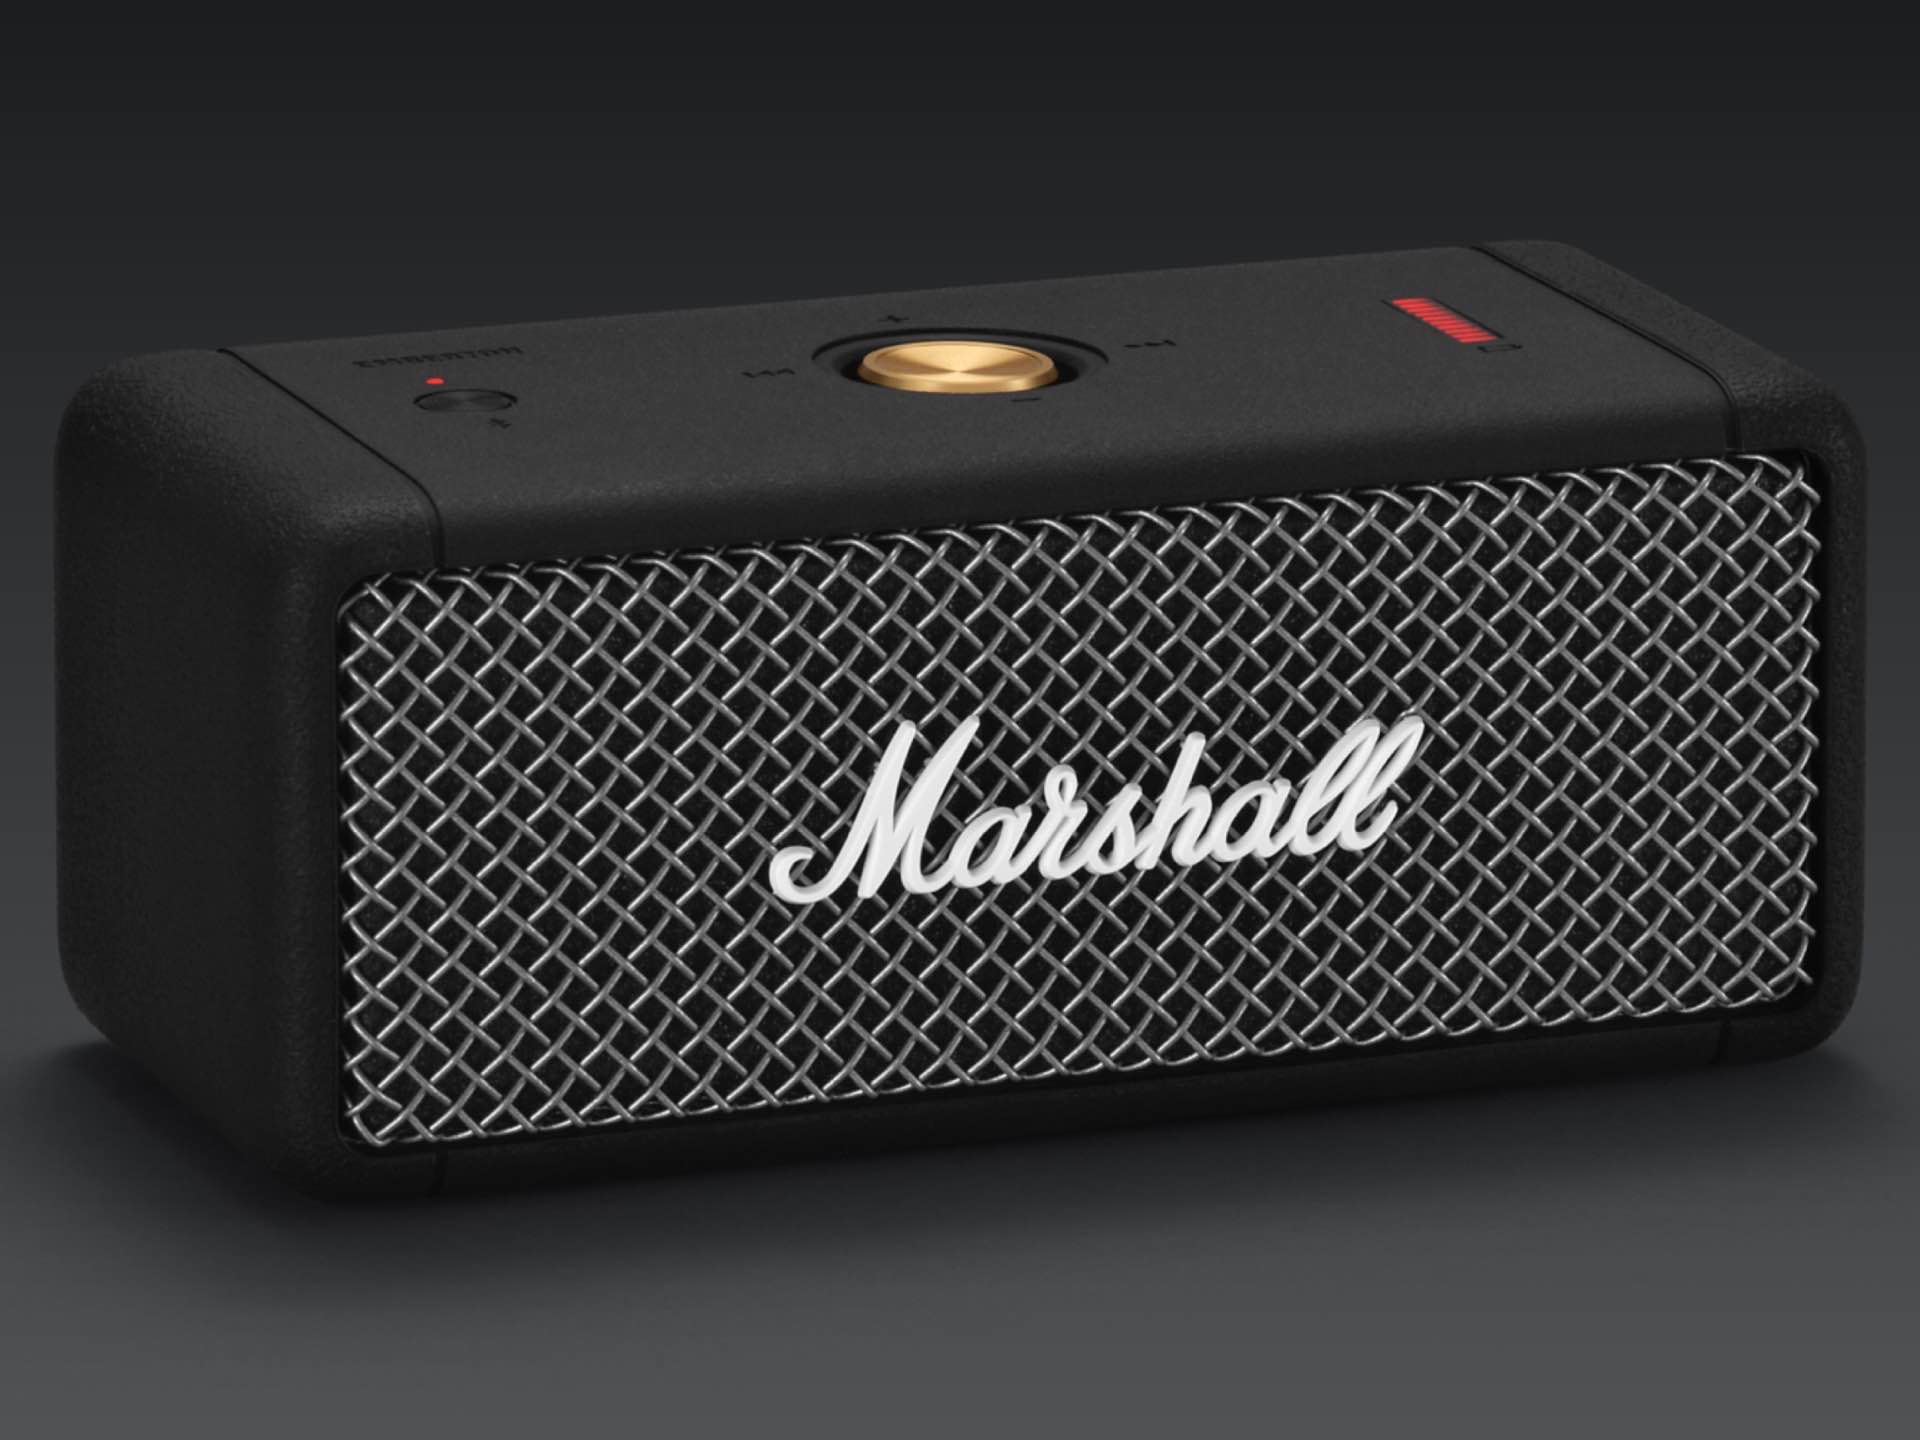 Marshall's “Emberton” Bluetooth speaker. ($130)